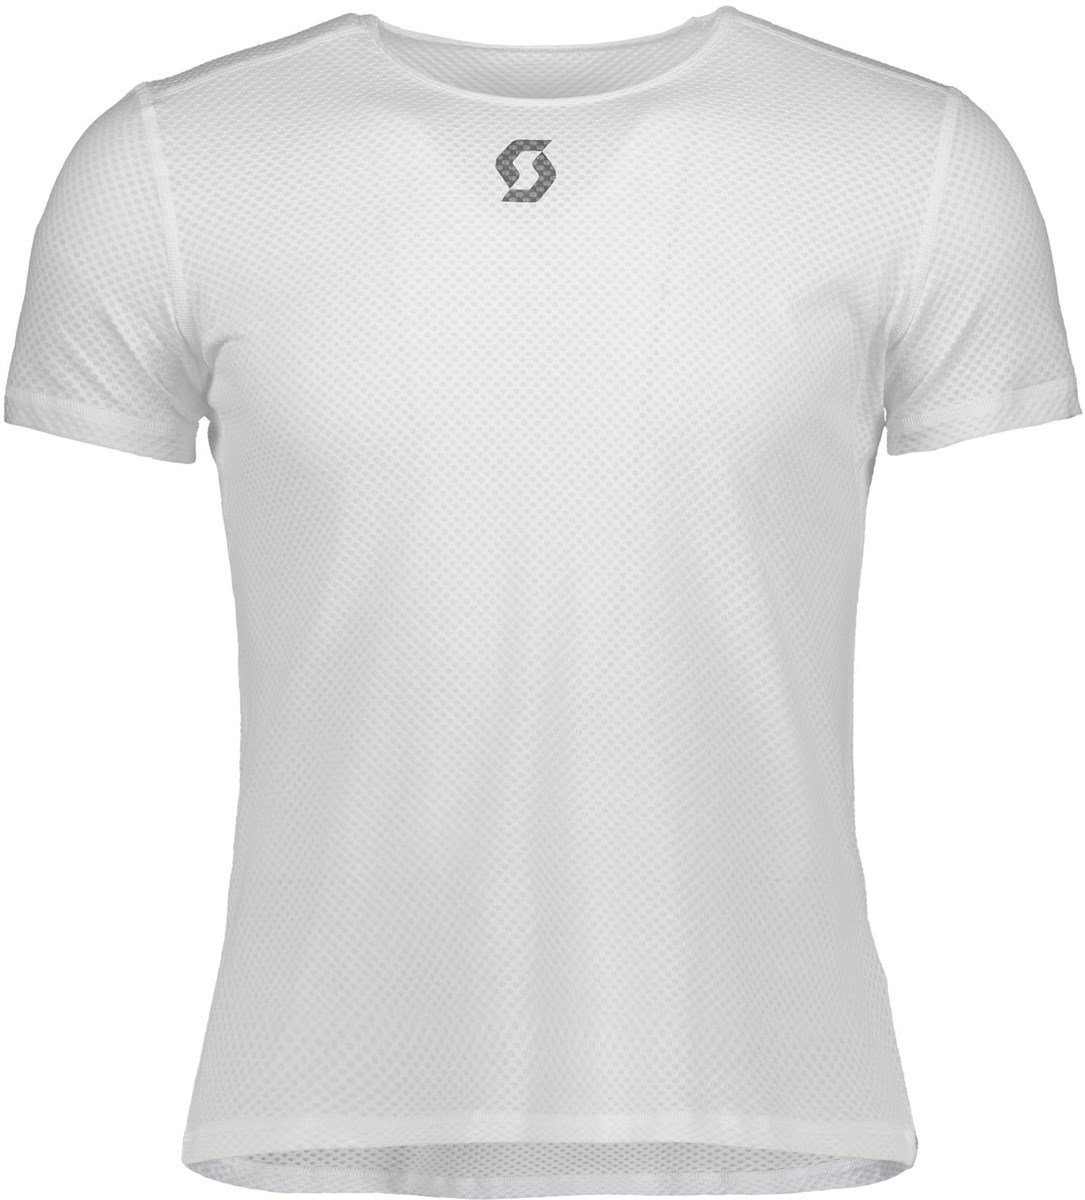 Scott Underwear Short Sleeve Shirt product image